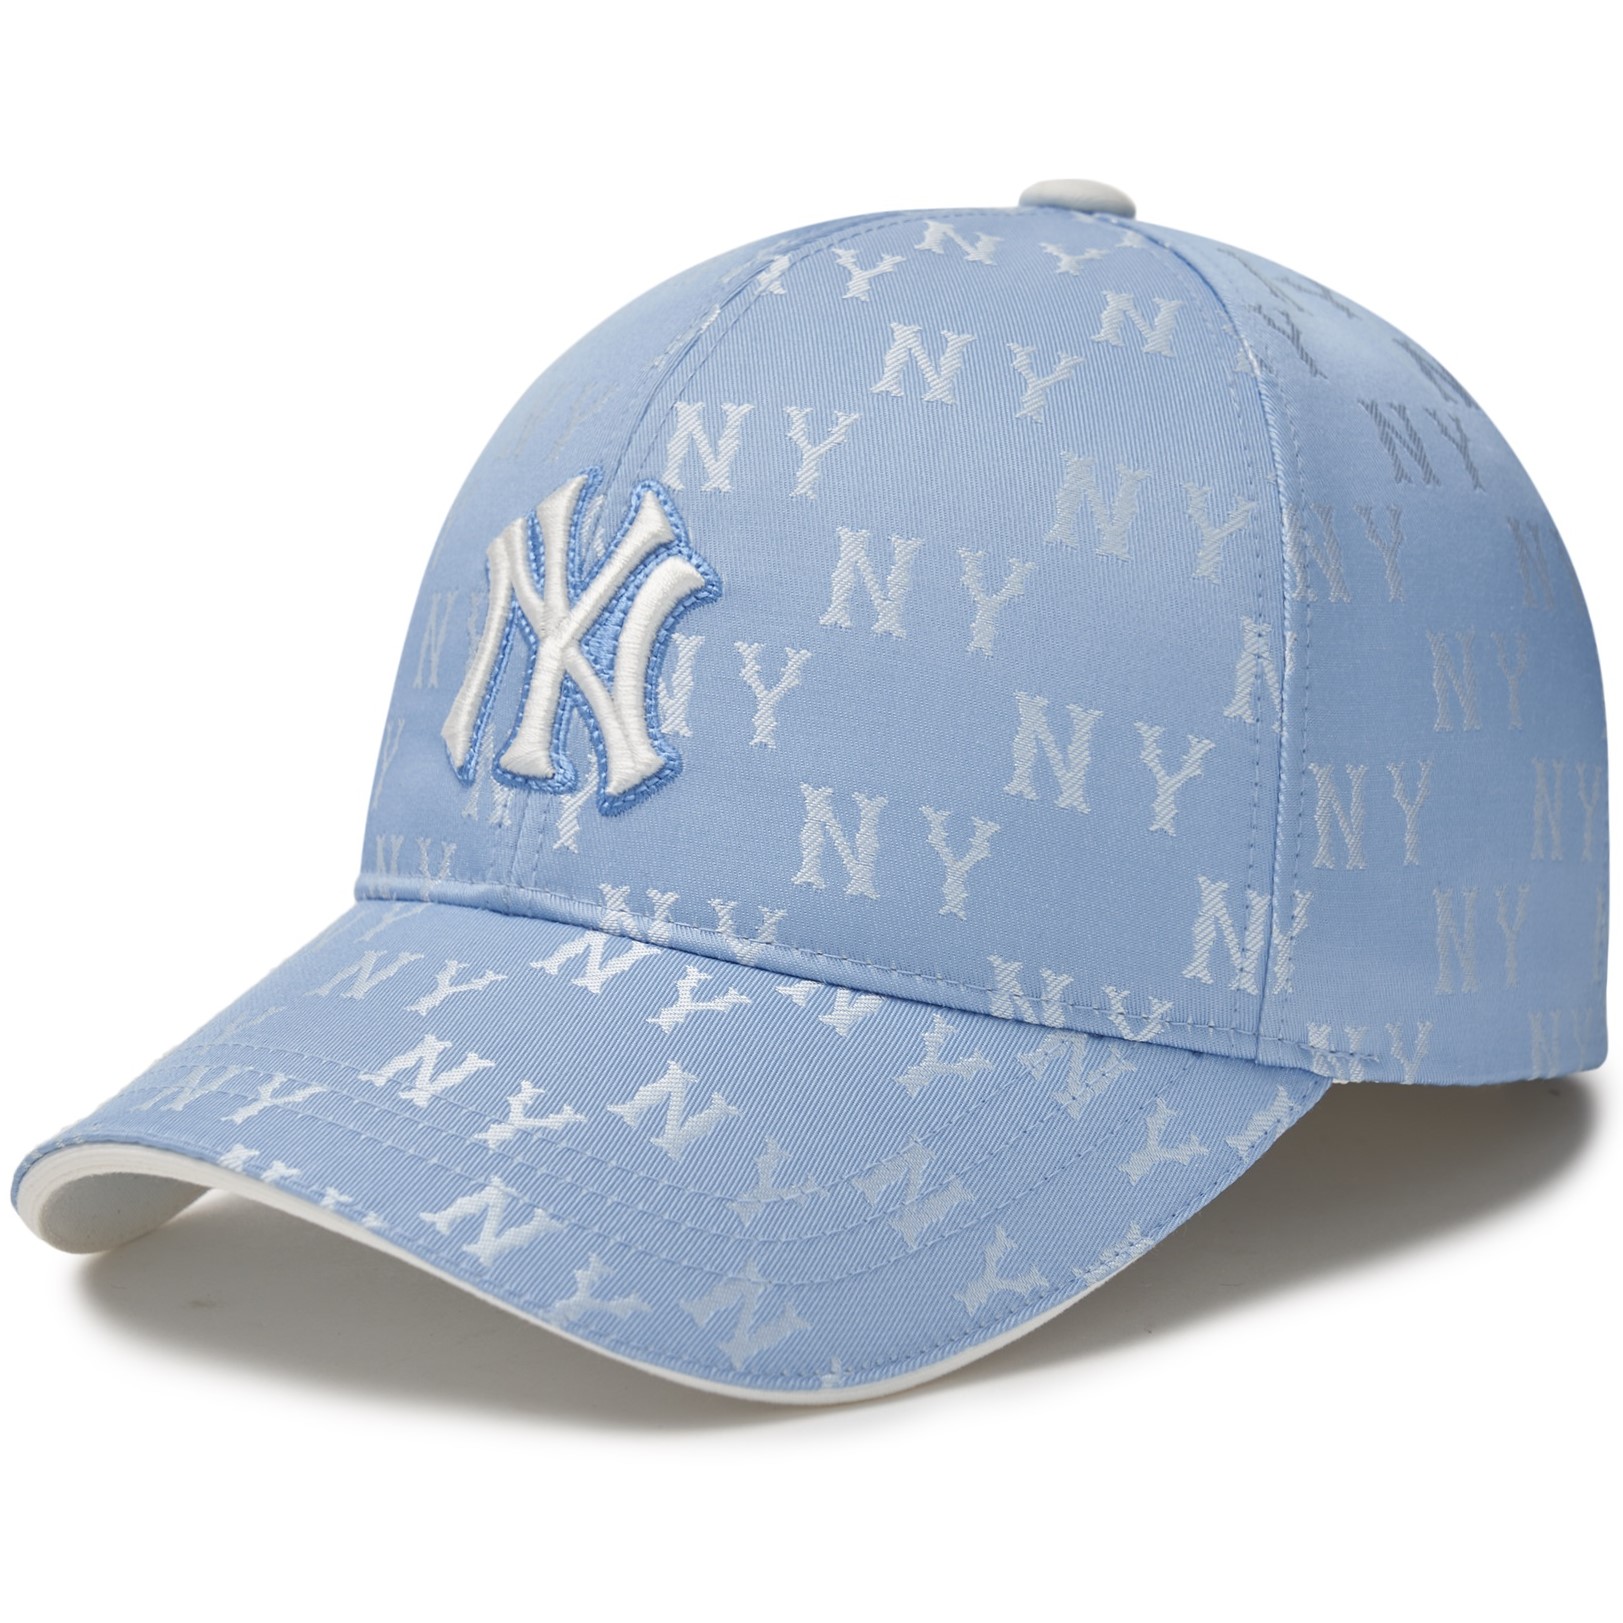 NÓN MLB CLASSIC MONOGRAM STRUCTURE BALL CAP NEW YORK YANKEES SKYBLUE 3ACPM014N-50SBD 11